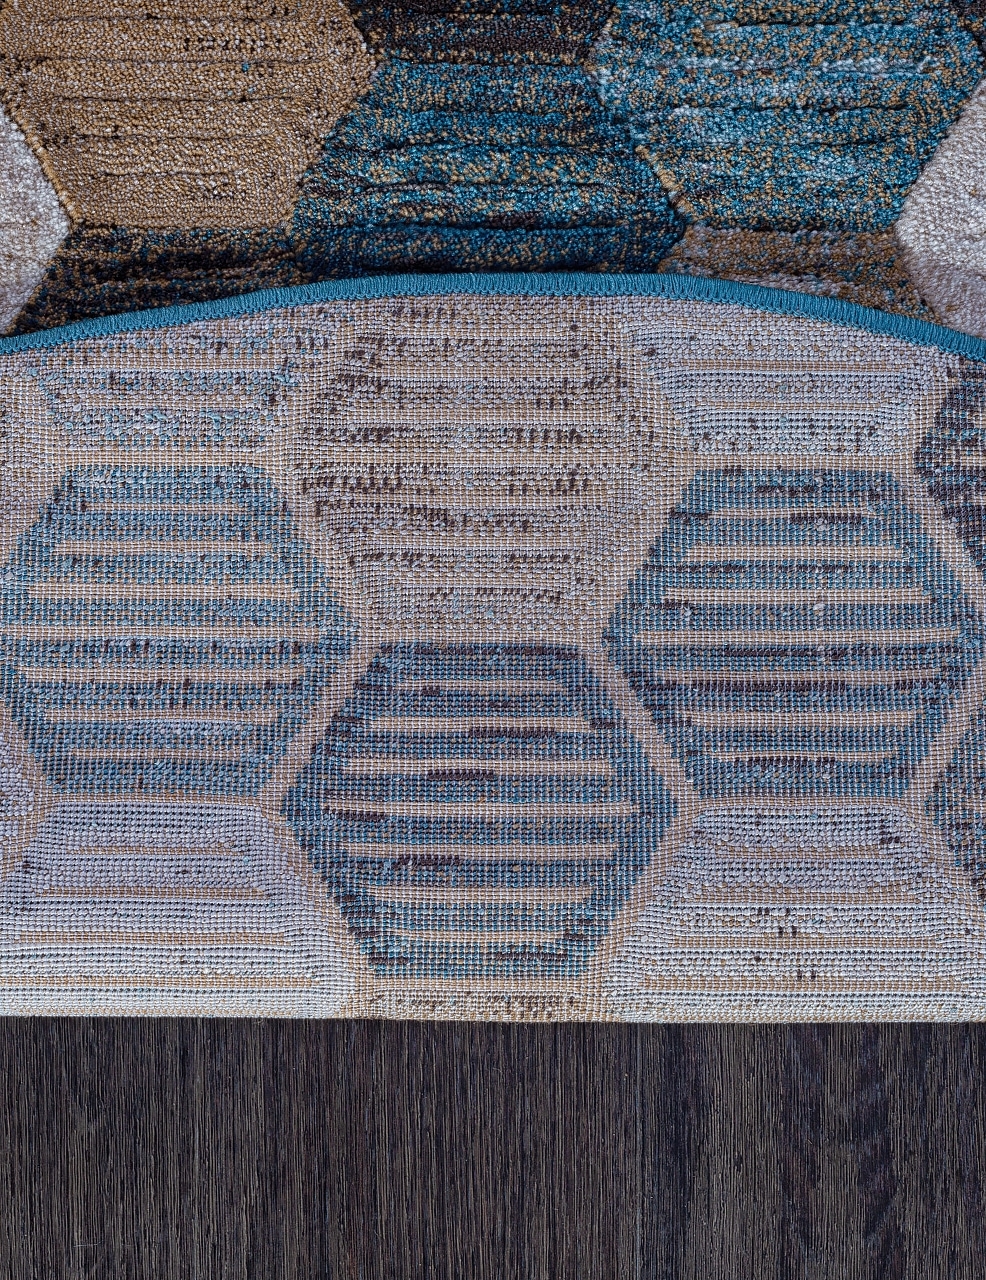 Ковер D579 - BEIGE-BLUE - Овал - коллекция MATRIX - фото 5